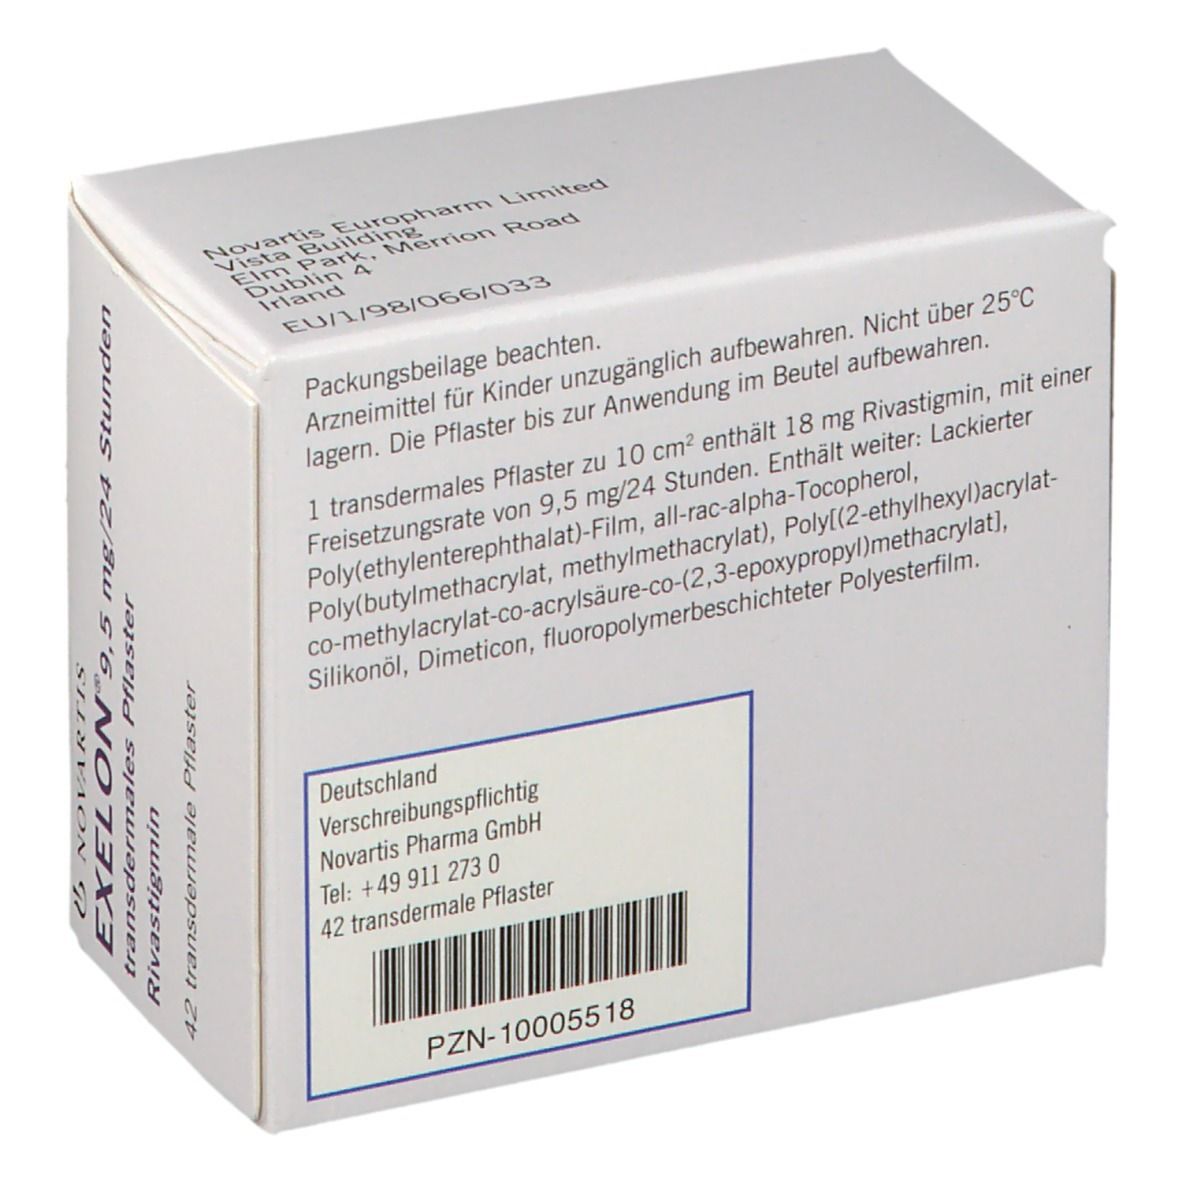 Exelon® 9,5 mg/24 Stunden